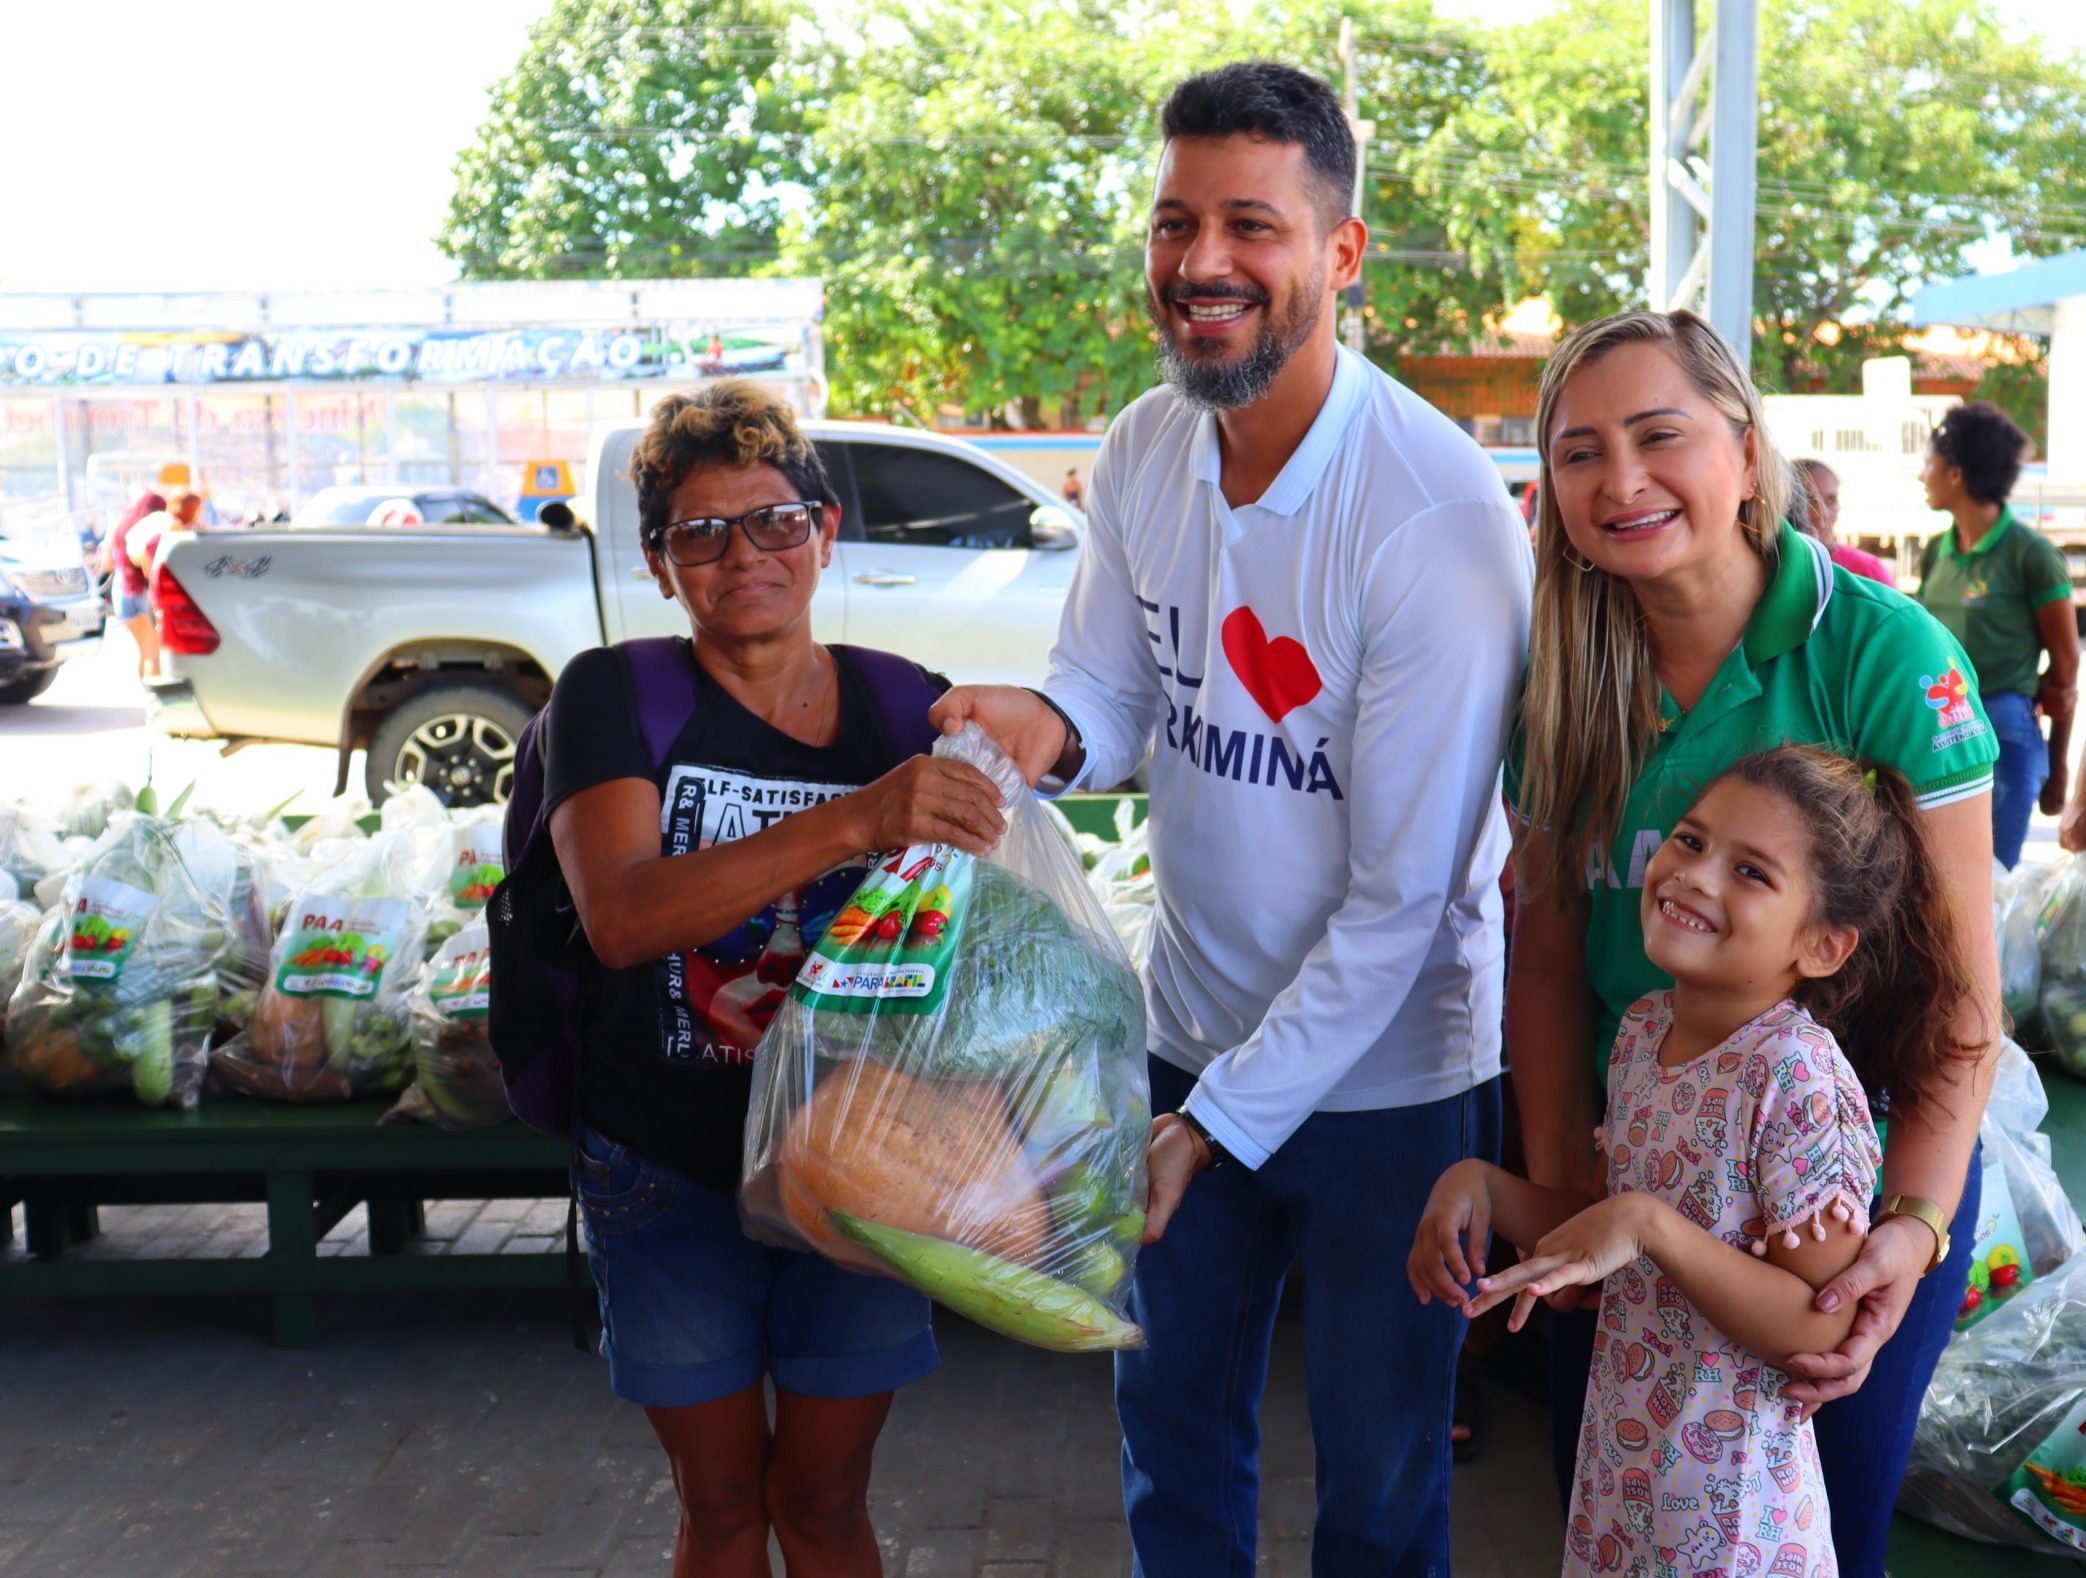 Prefeitura, Secretaria de Assistência Social e SEMAGRI entrega Alimentos do PAA e Beneficia Mais de 200 Famílias